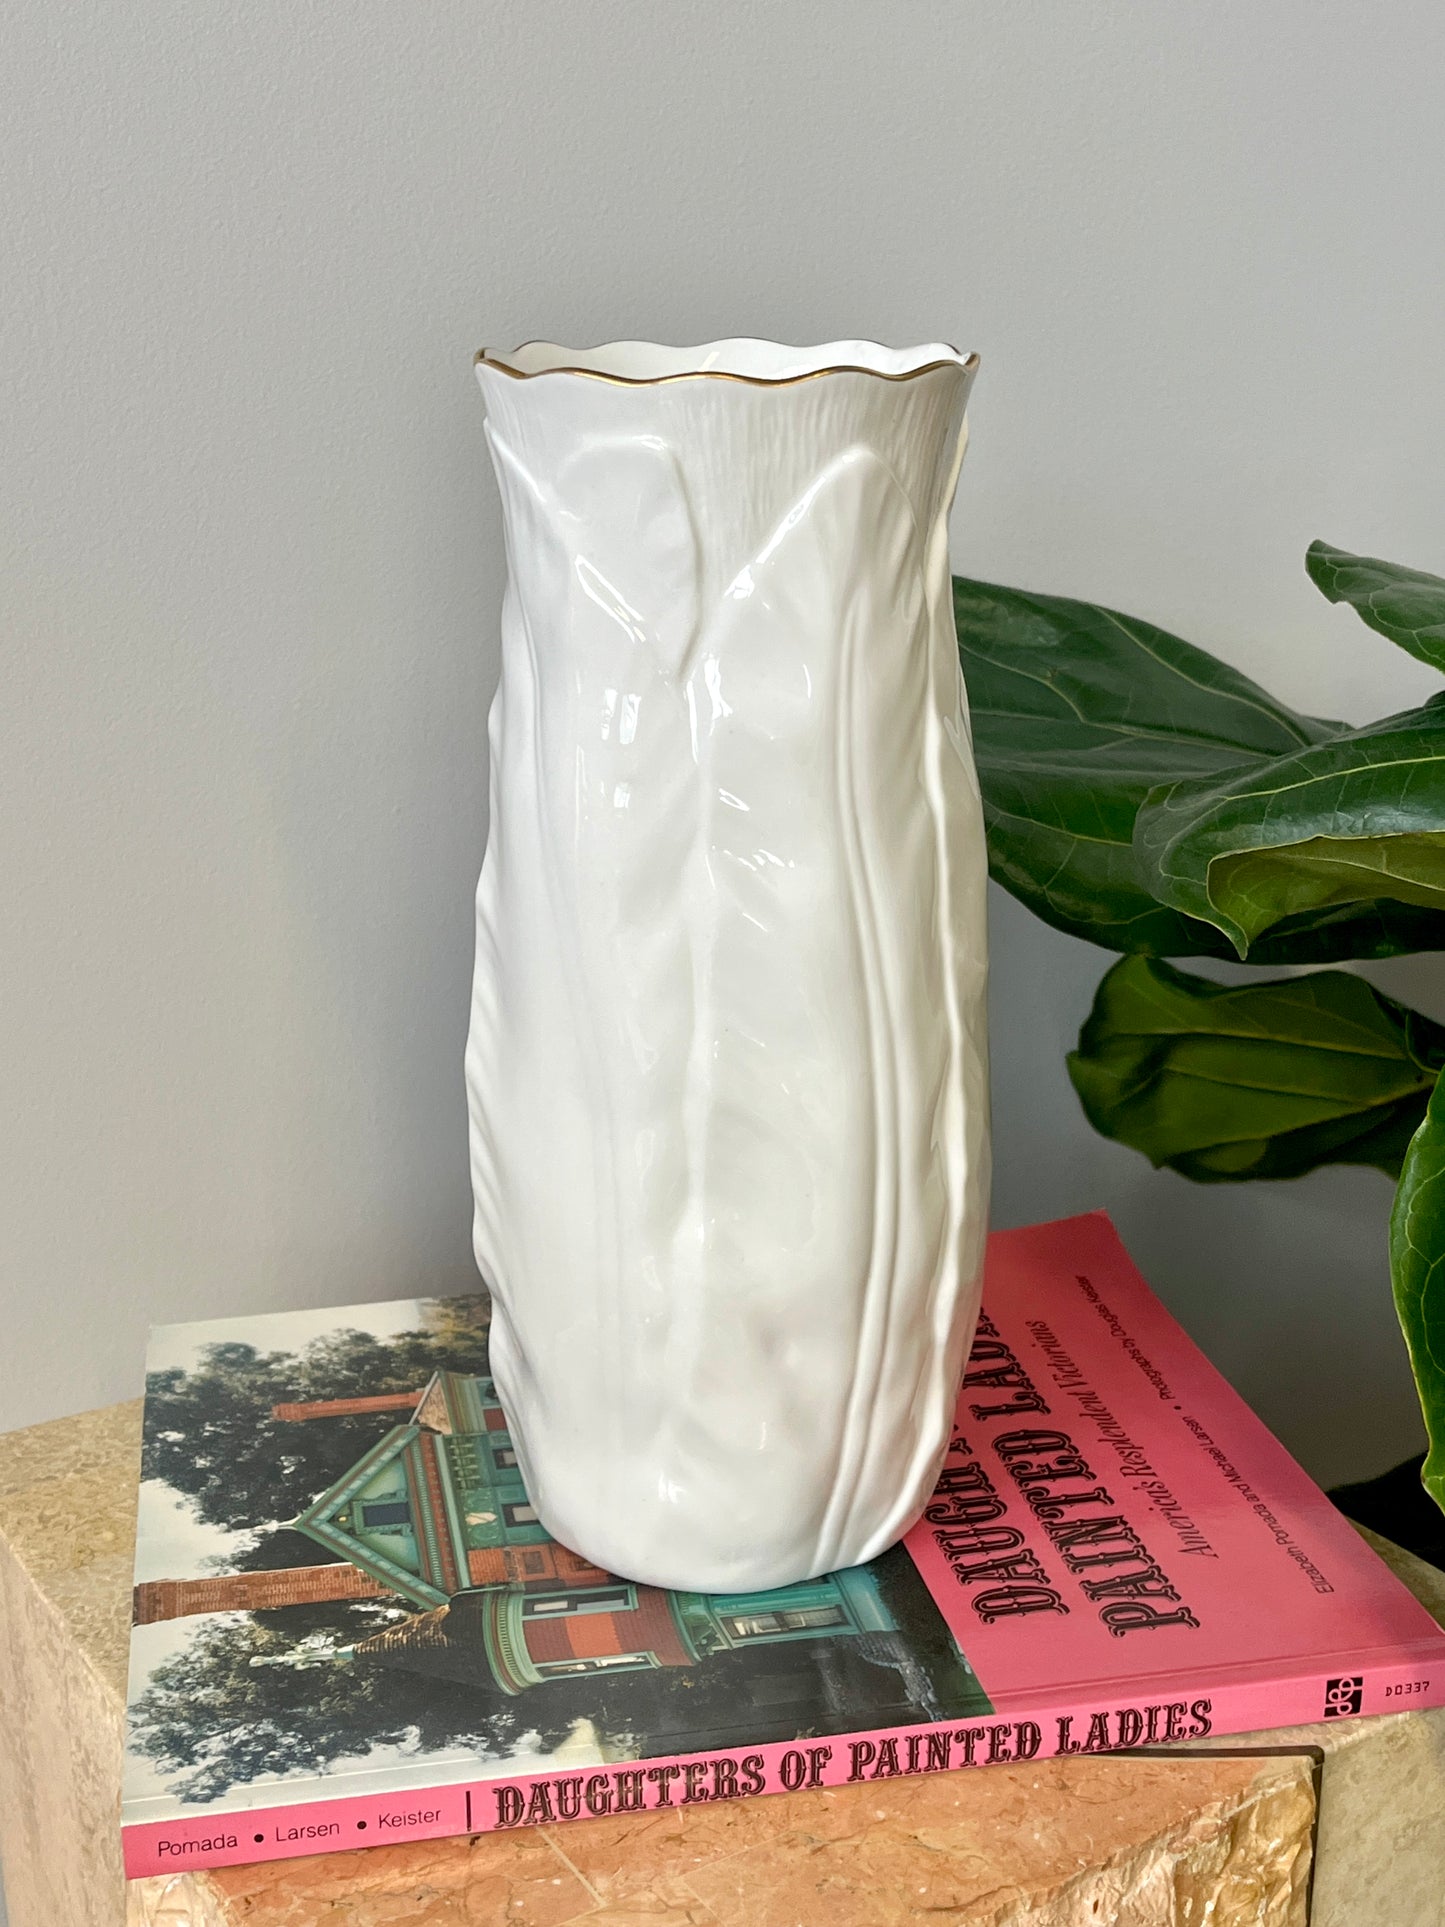 Vintage 1986 Lenox Bone China “Fern Leaf” Vase